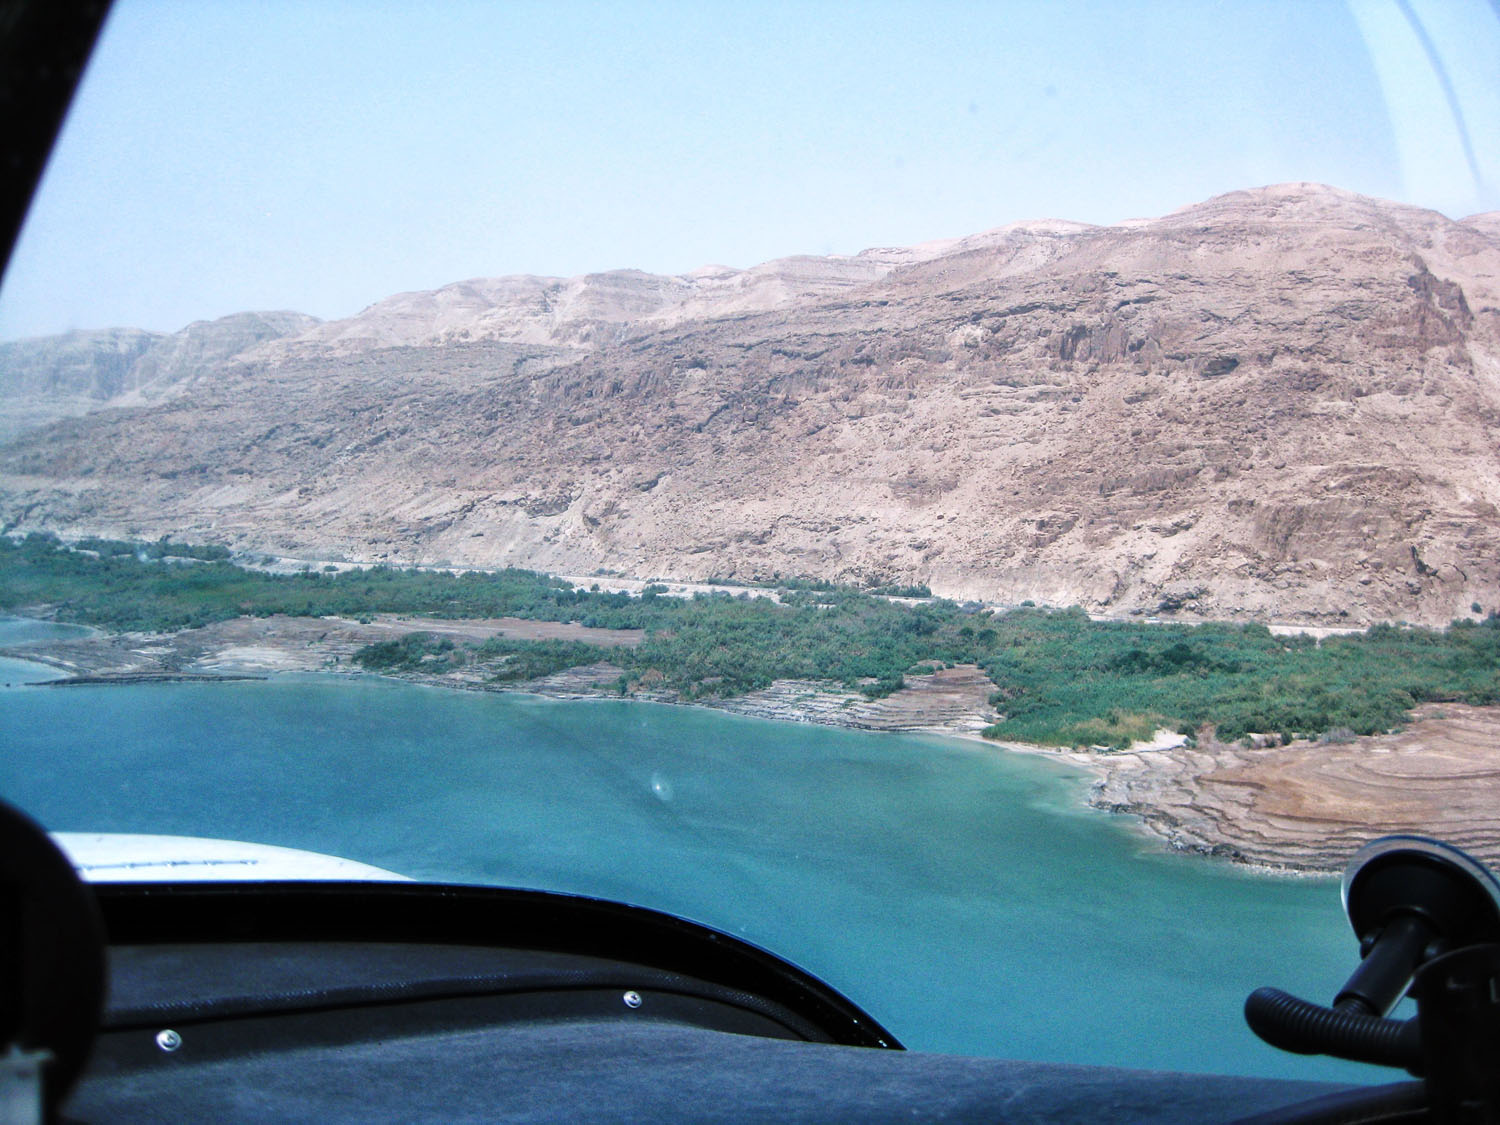 West coast of the Dead Sea.